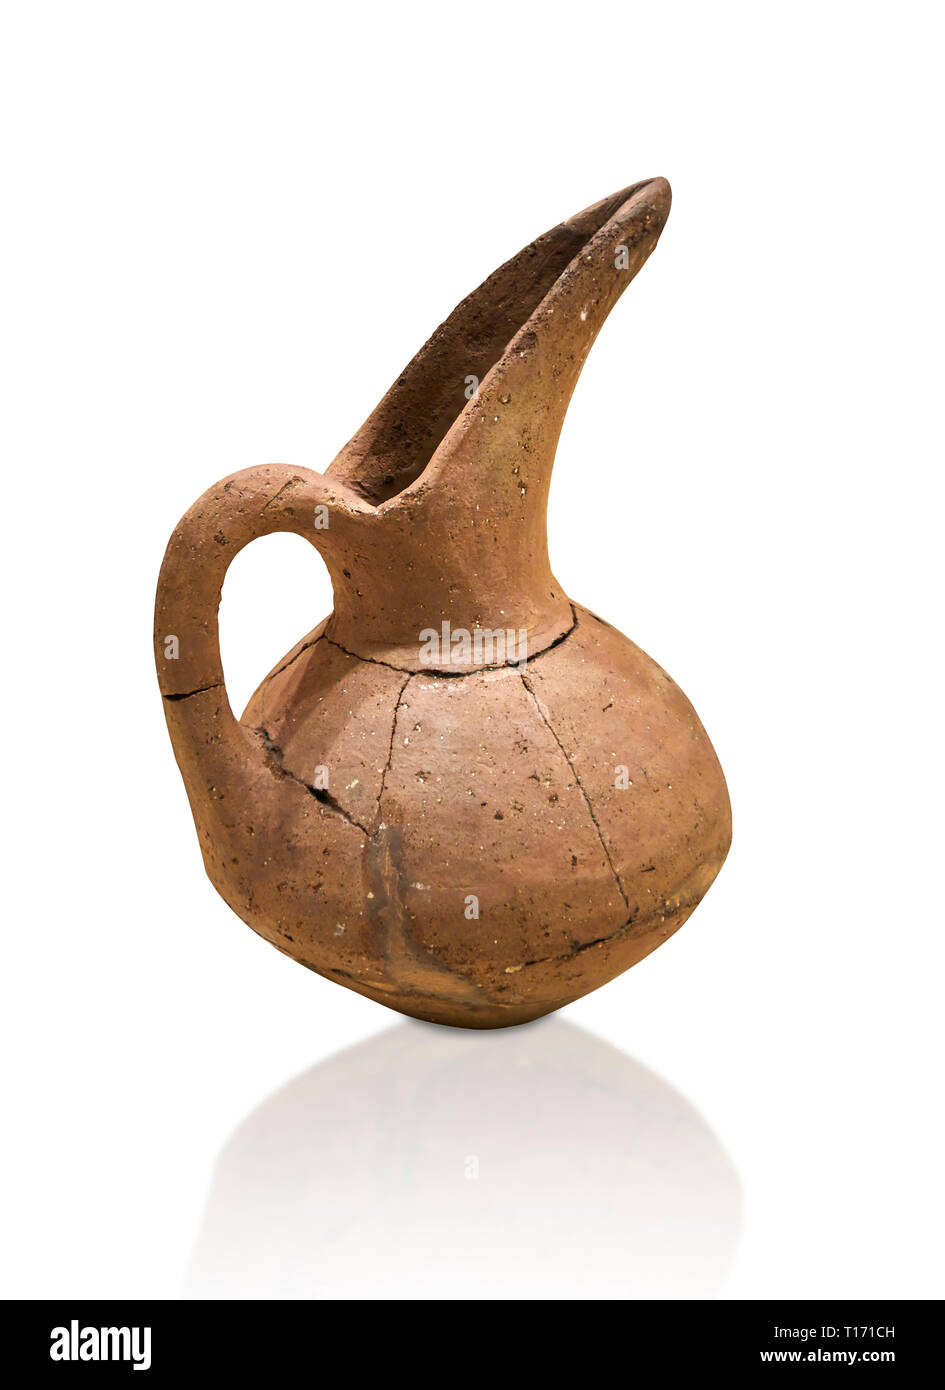 https://c8.alamy.com/comp/T171CH/hittite-terra-cotta-beak-spout-pitcher-hittite-period-1600-1200-bc-hattusa-boazkale-orum-archaeological-museum-corum-turkey-against-a-whi-T171CH.jpg